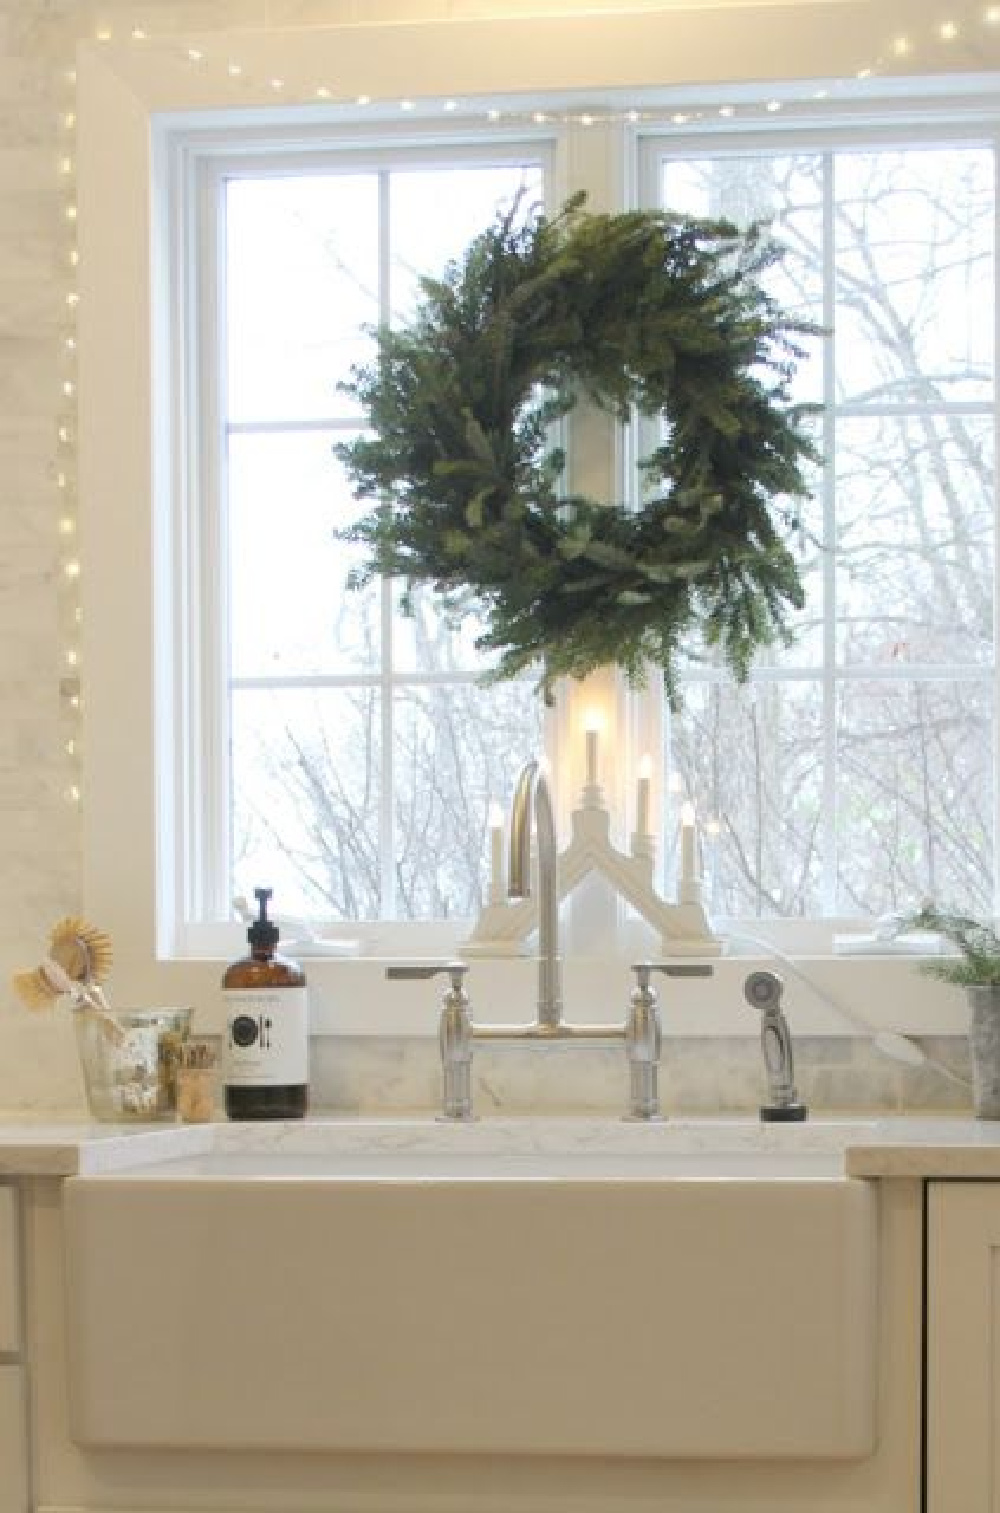 Farmhouse Christmas decor in my kitchen with fresh wreath and fairy light over a farm sink. Hello Lovely Studio. #farmhousechristmas #christmasdecor #farmsink #freshwreath